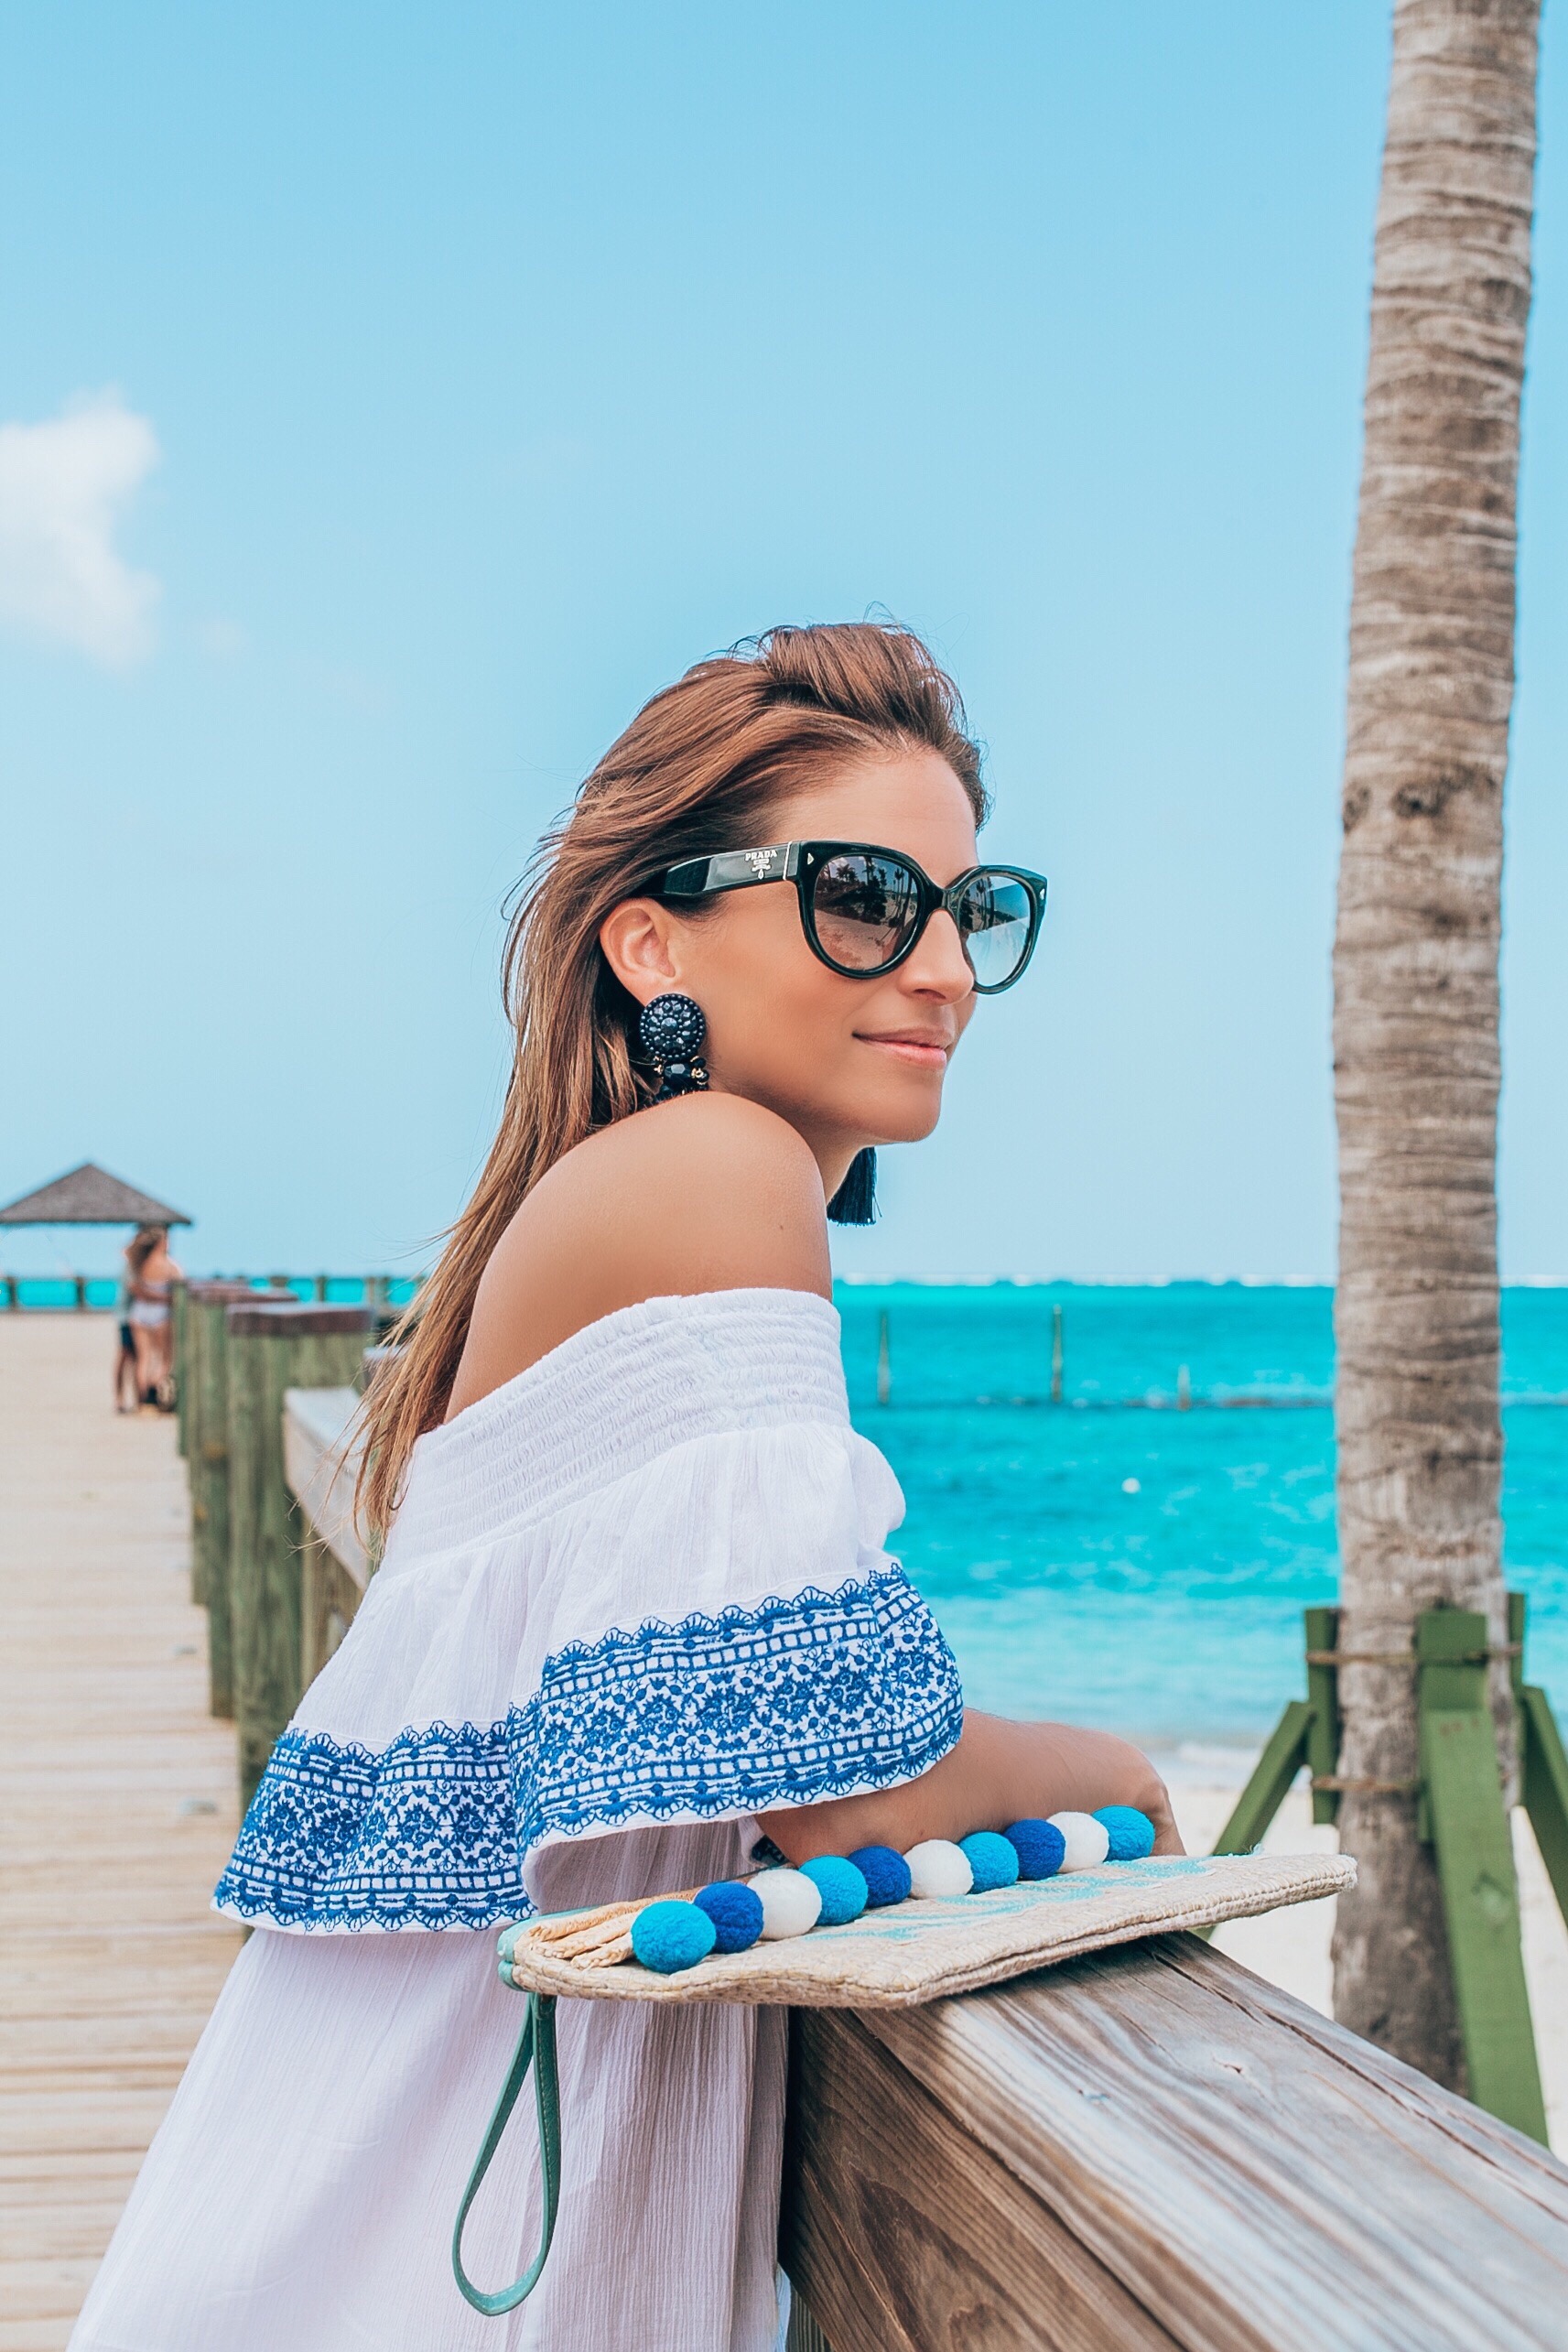 Perfect white and blue off the shoulder dress with valentino rockstud flip flops and Aloha pom pom bag; baha mar resort Bahamas; mandy furnis sparkleshinylove